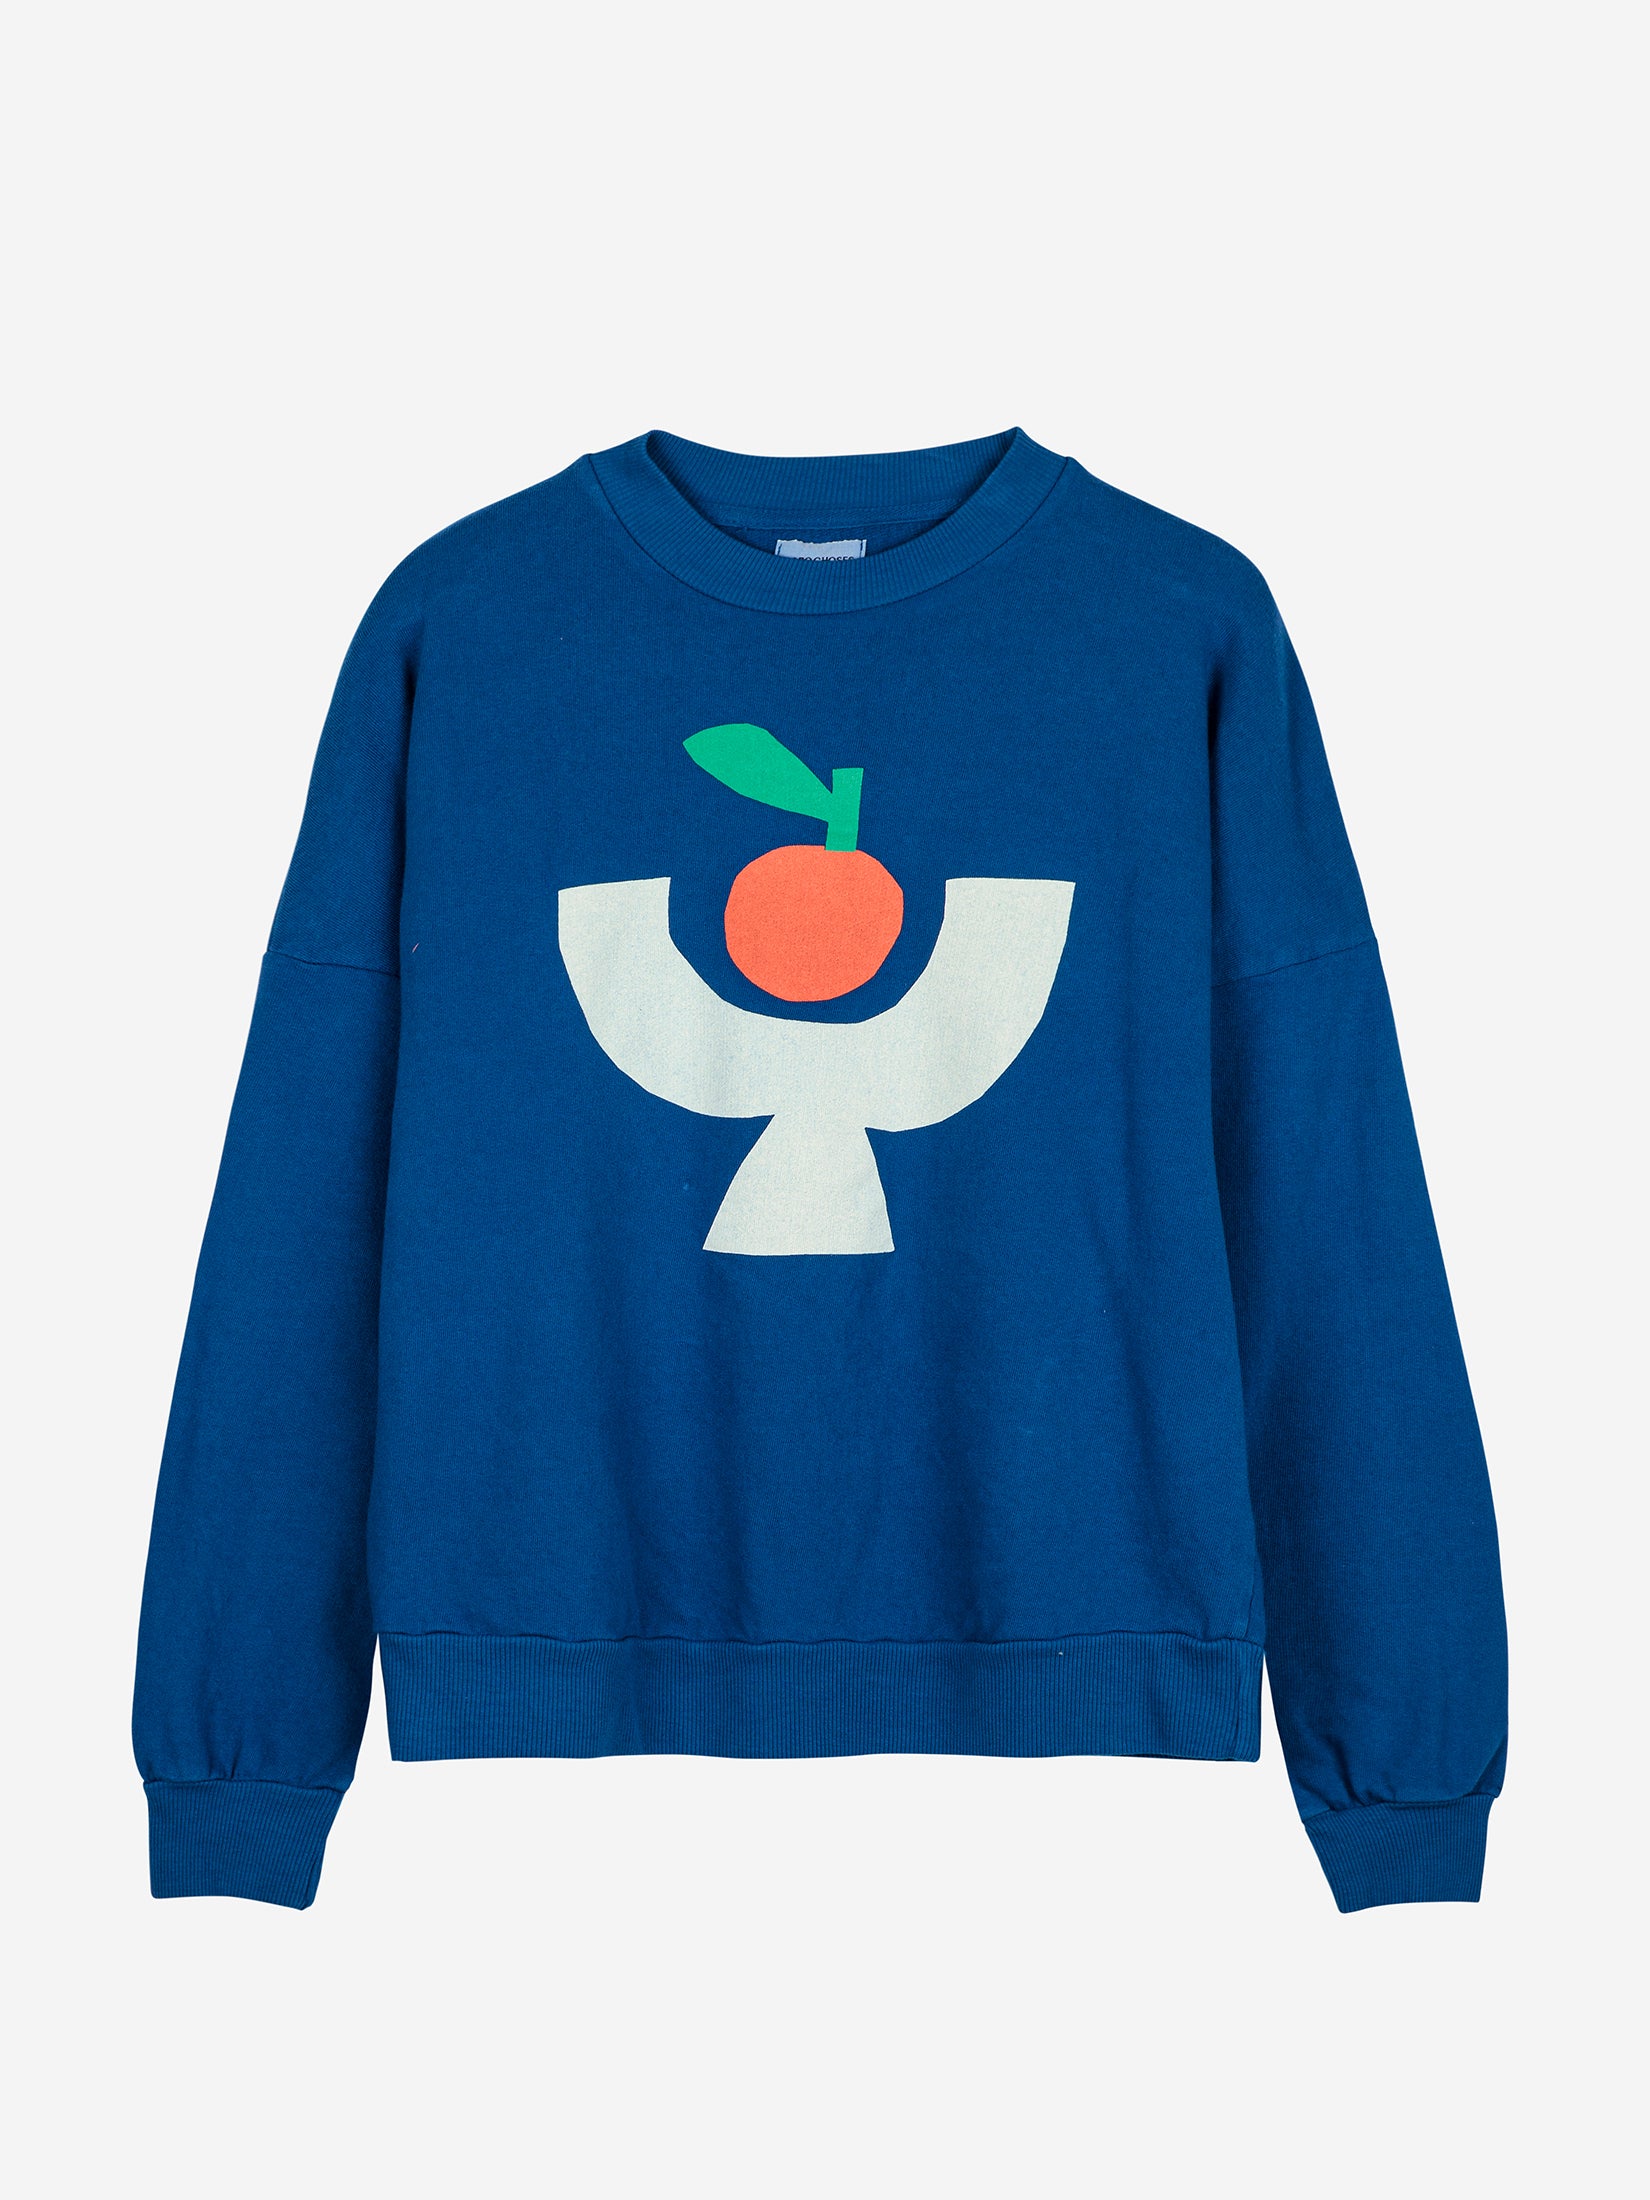 NEW Bobo Choses WOMAN |  Tomato Plate sweatshirt